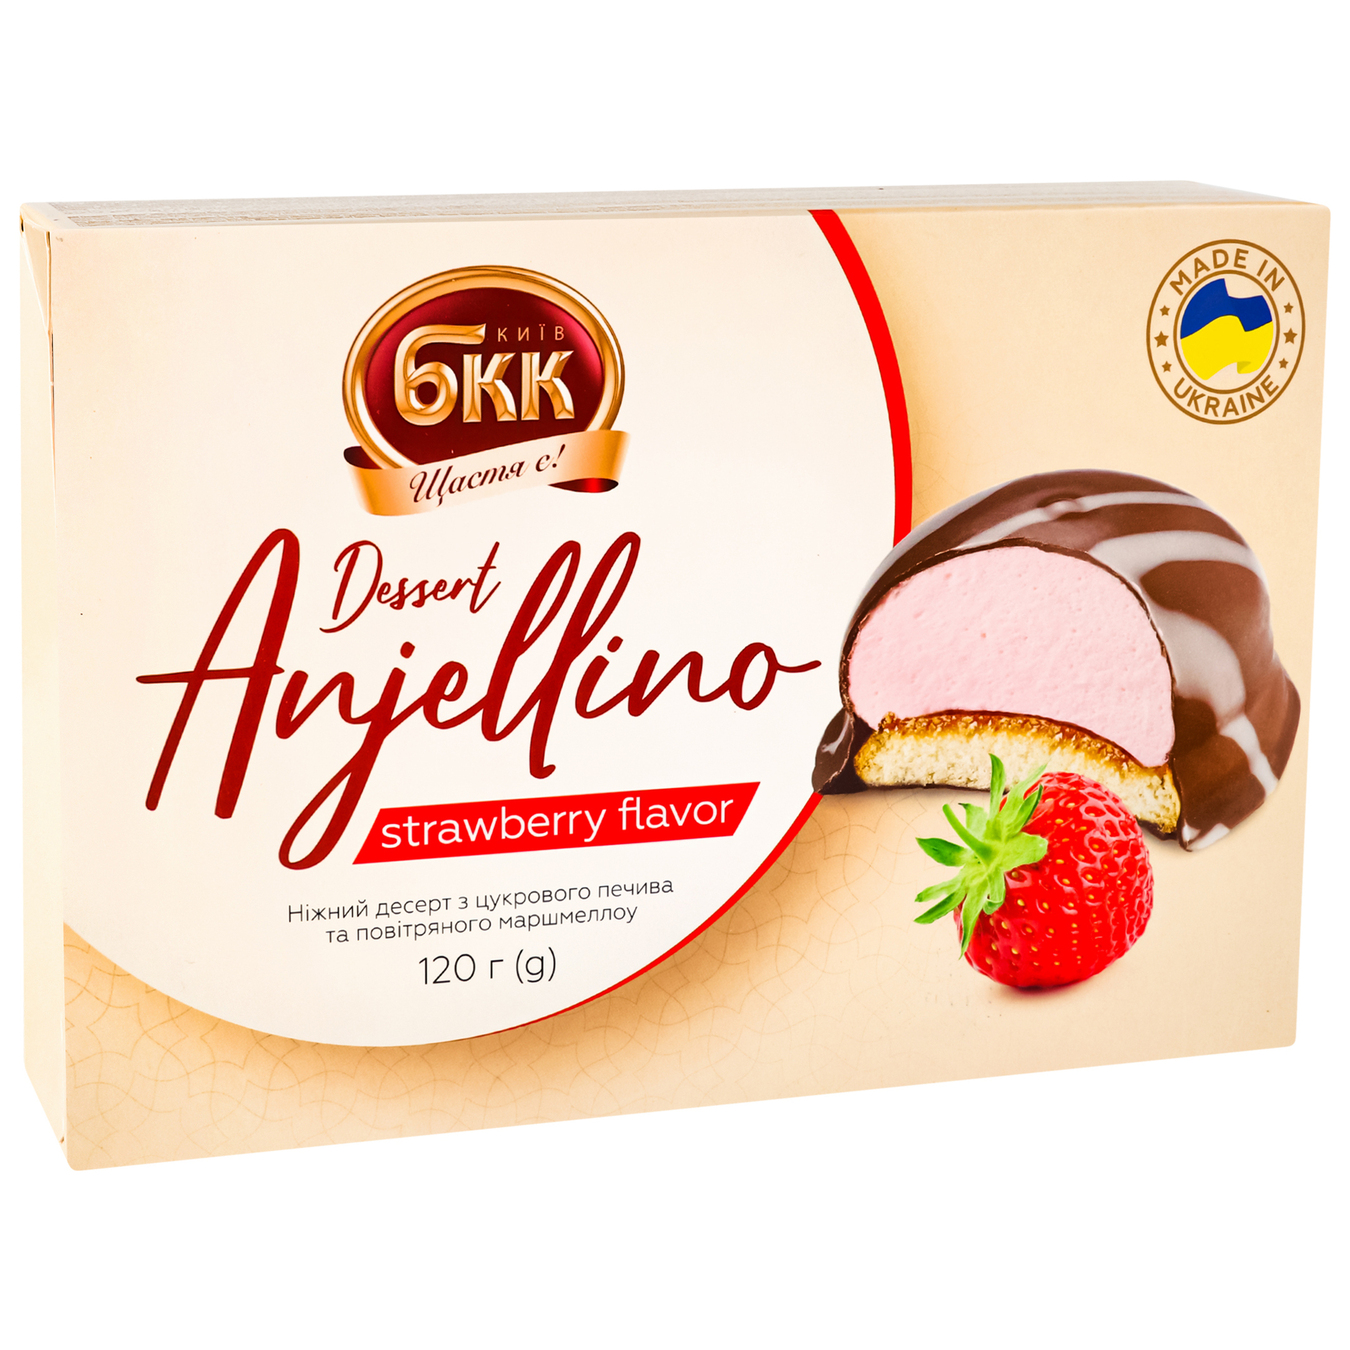 BKK Anjellino dessert with strawberry flavor 120g 5